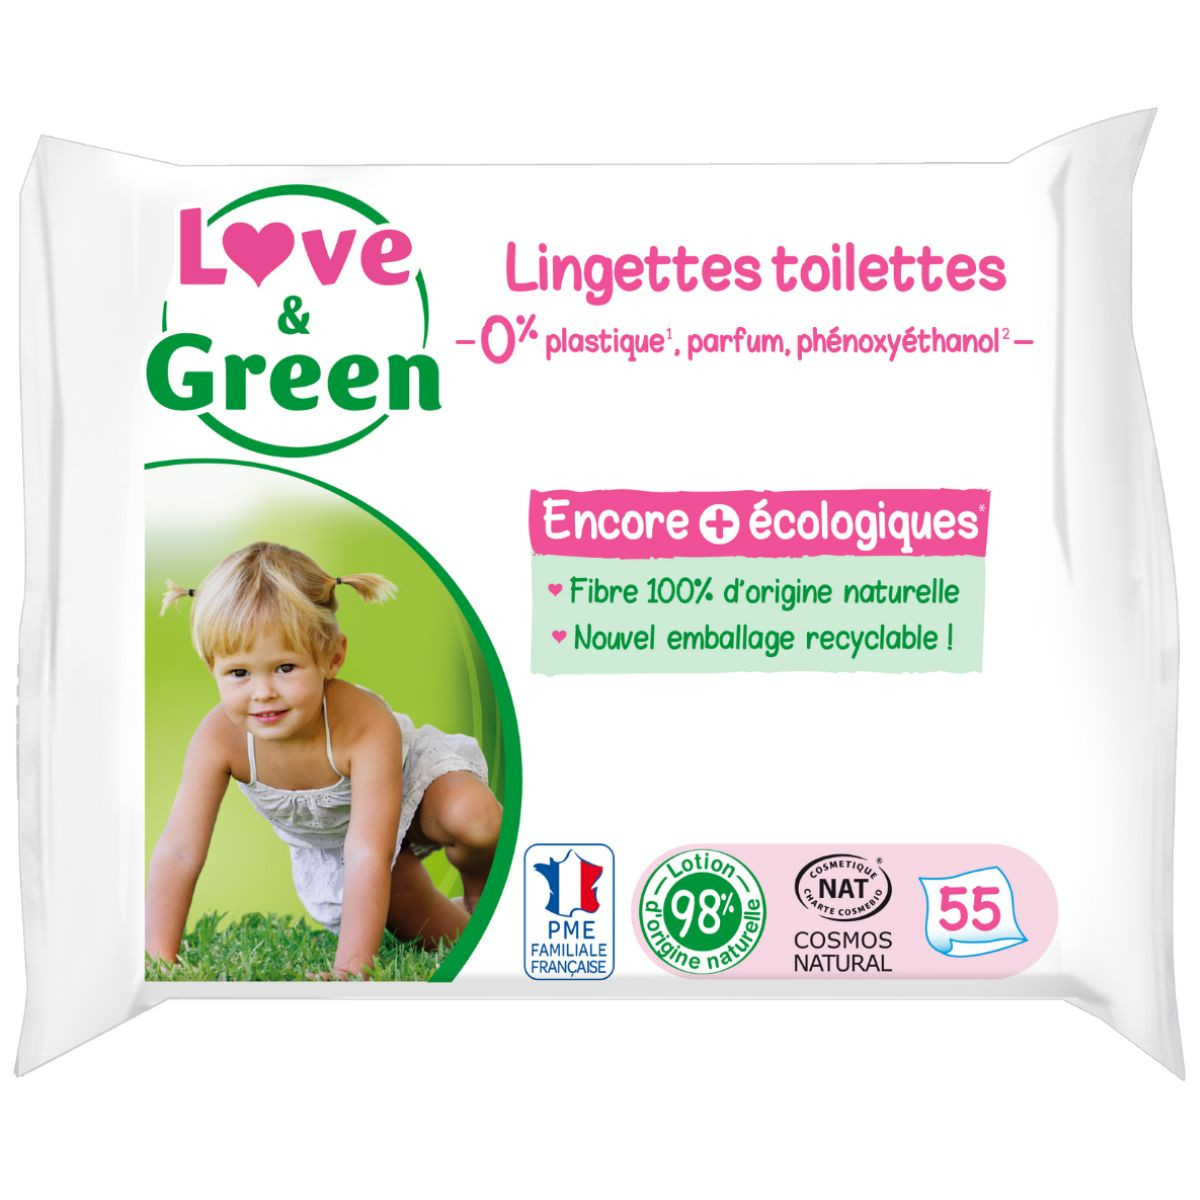 LOVE & GREEN LINGETTES AU LINIMENT - 56 Lingettes